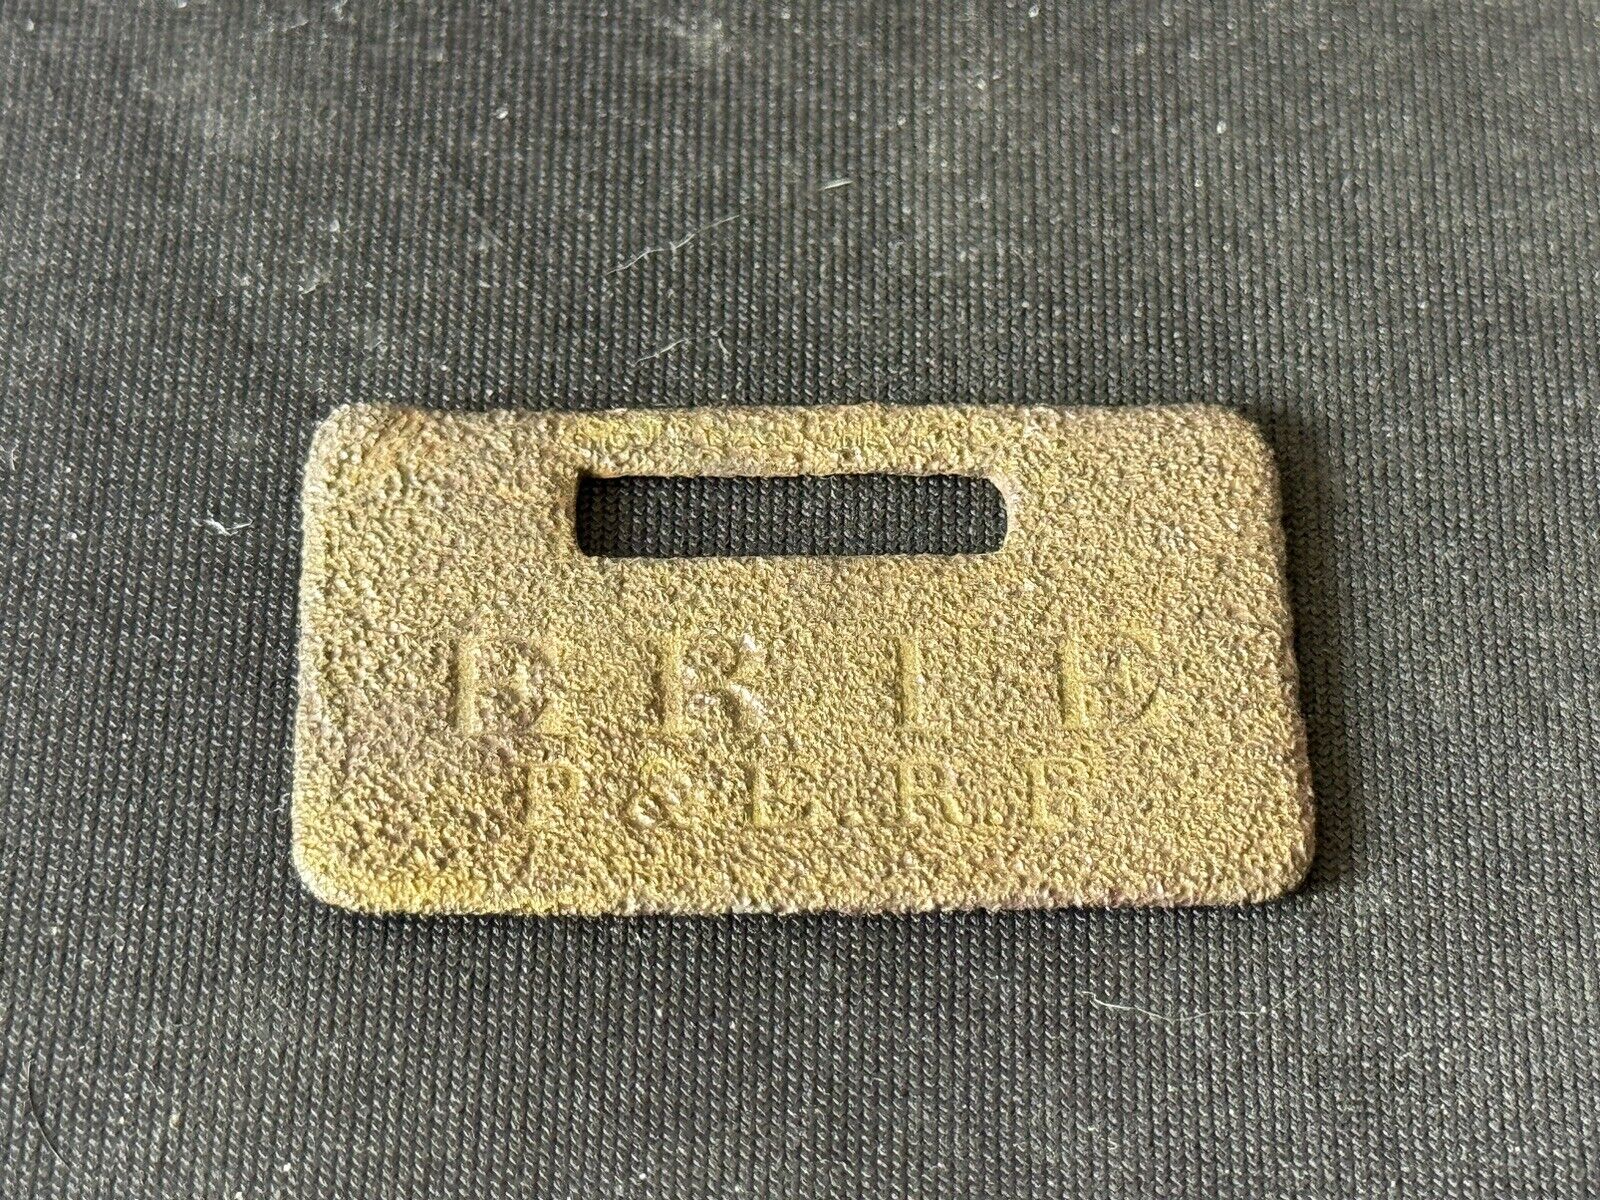 Philadelphia and Erie Railroad Brass Tag